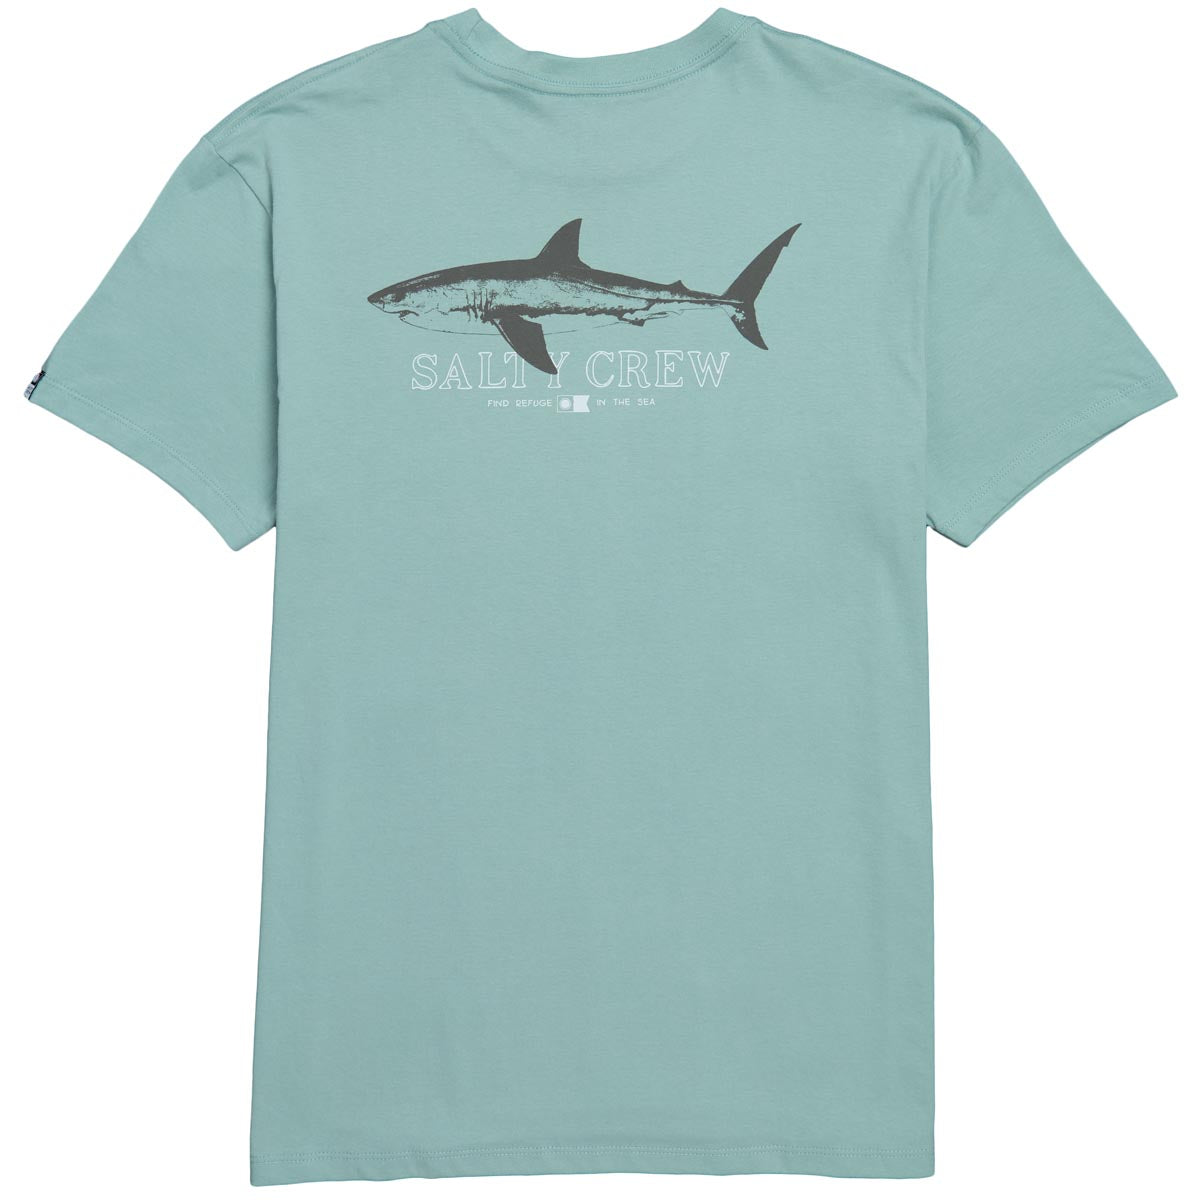 Salty Crew Brother Bruce Premium T-Shirt - Mackerel image 1